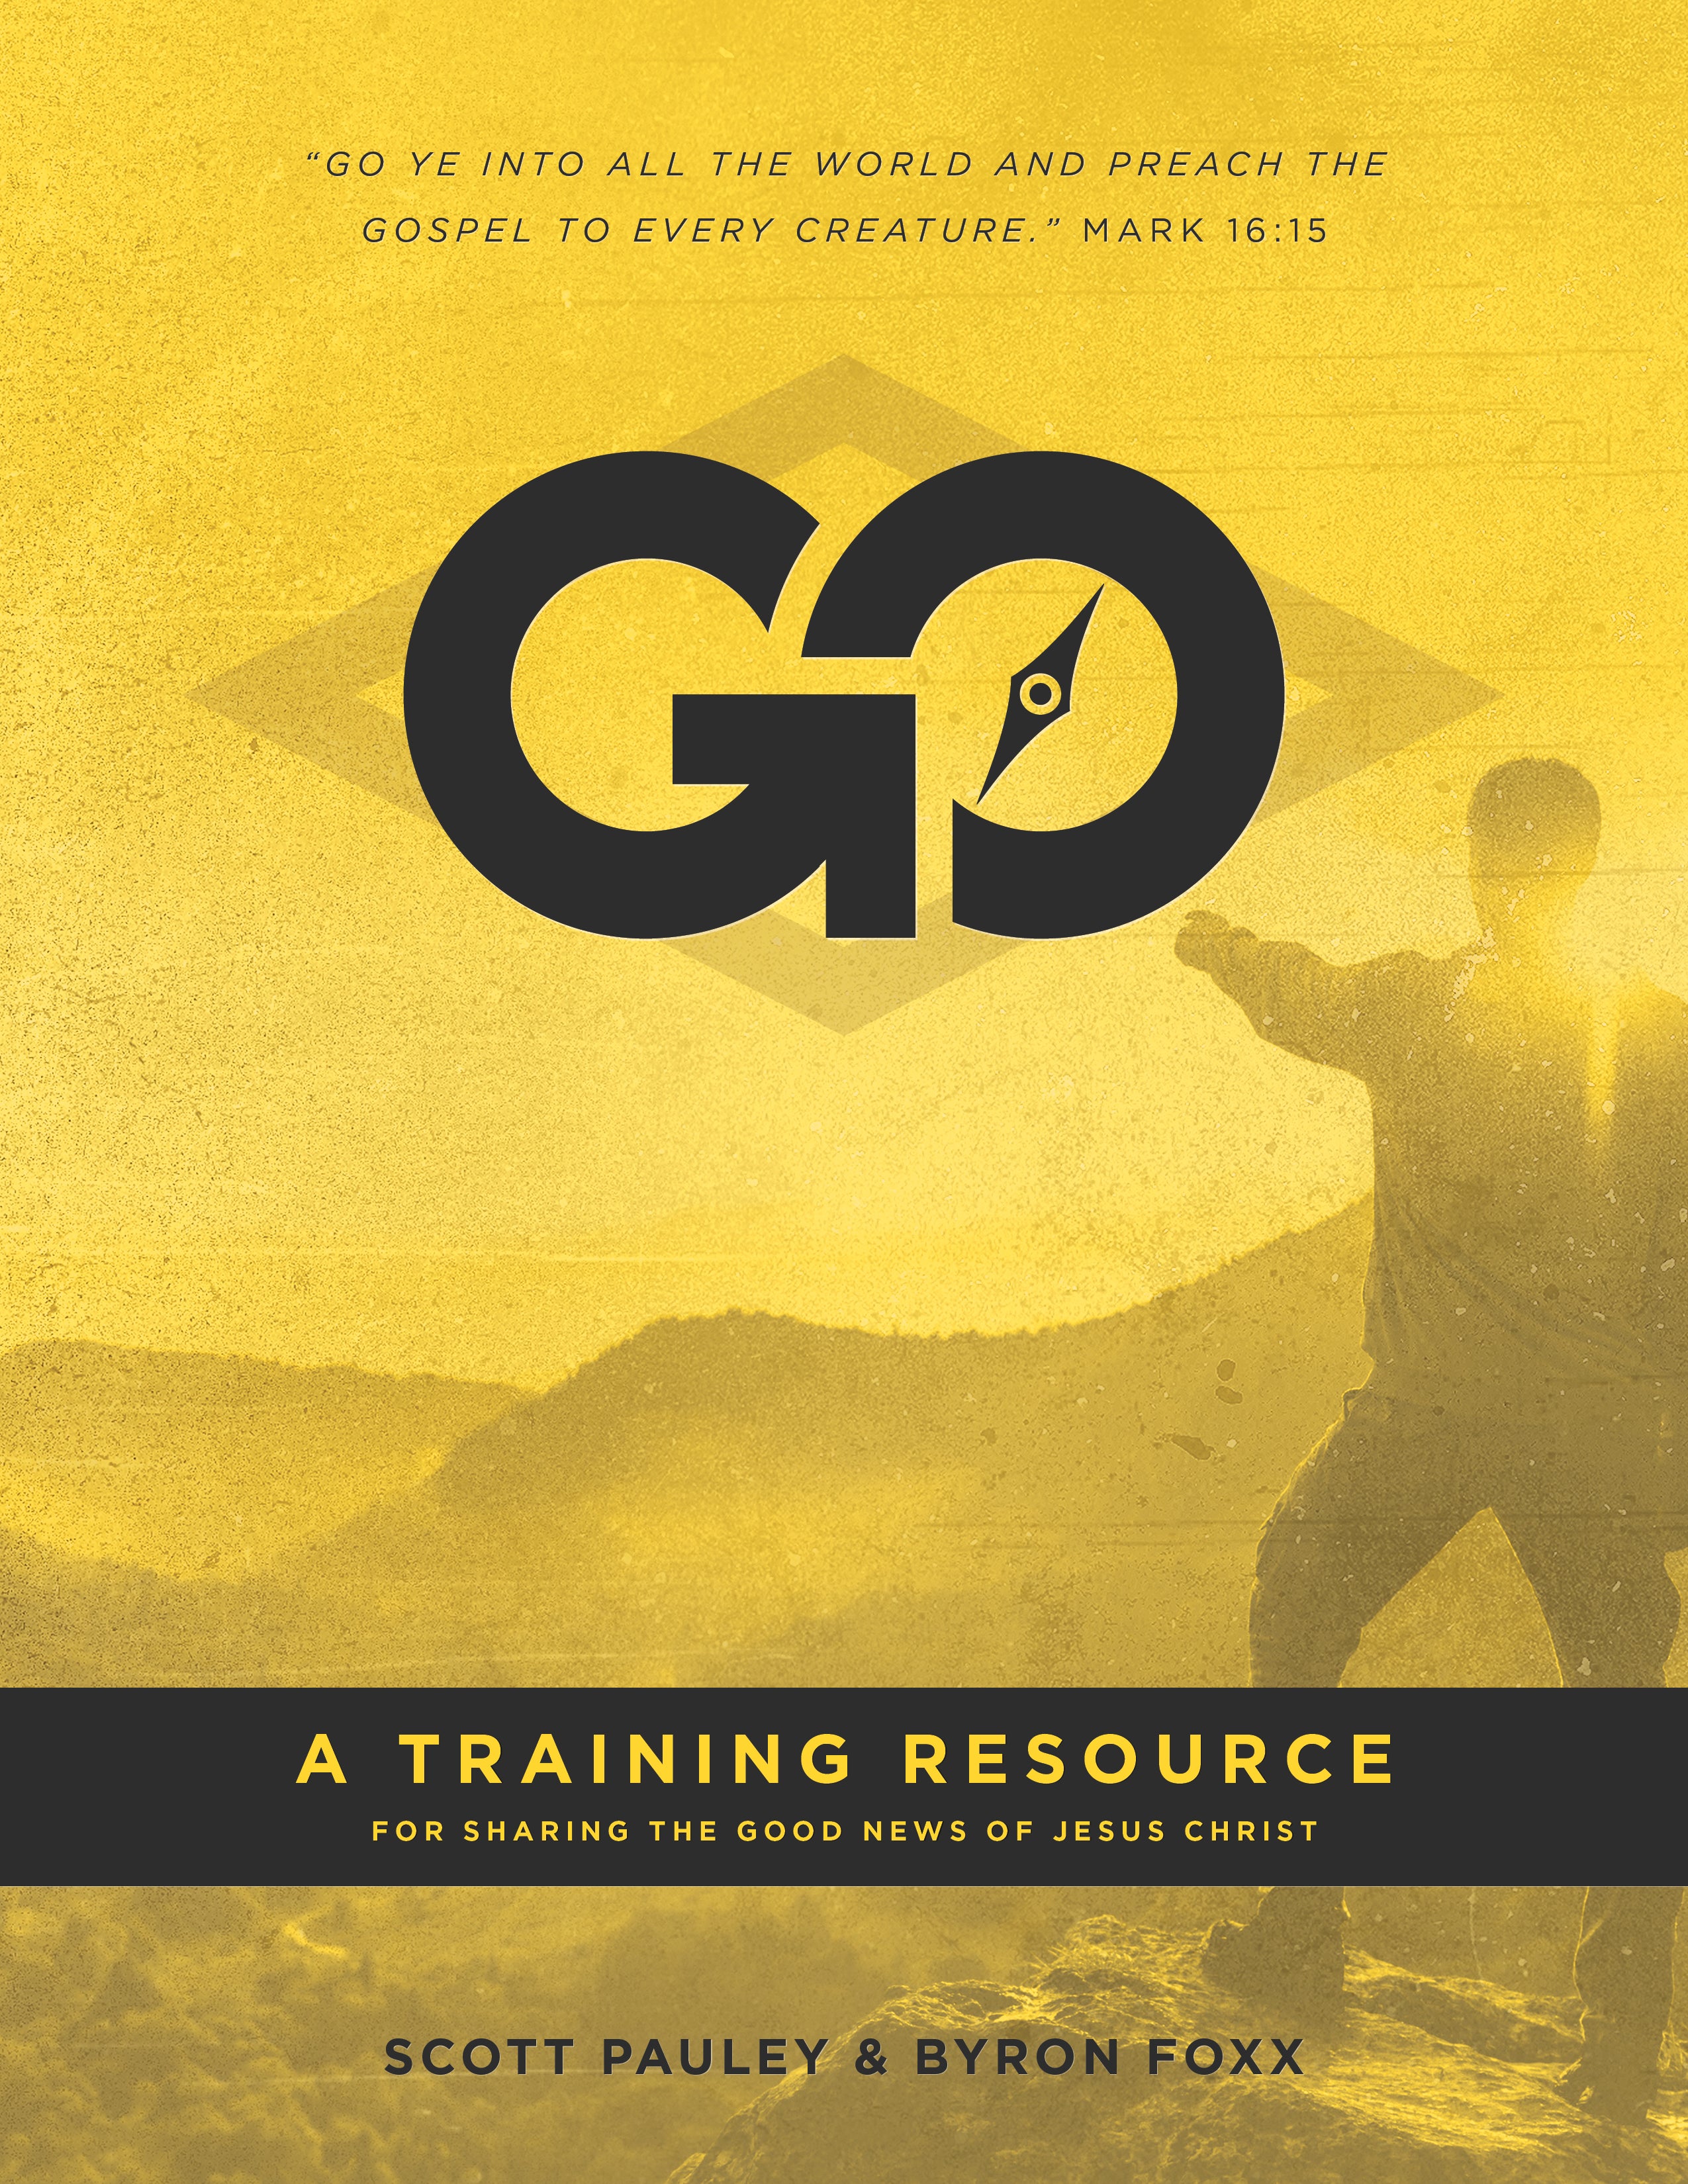 GO Training Kit